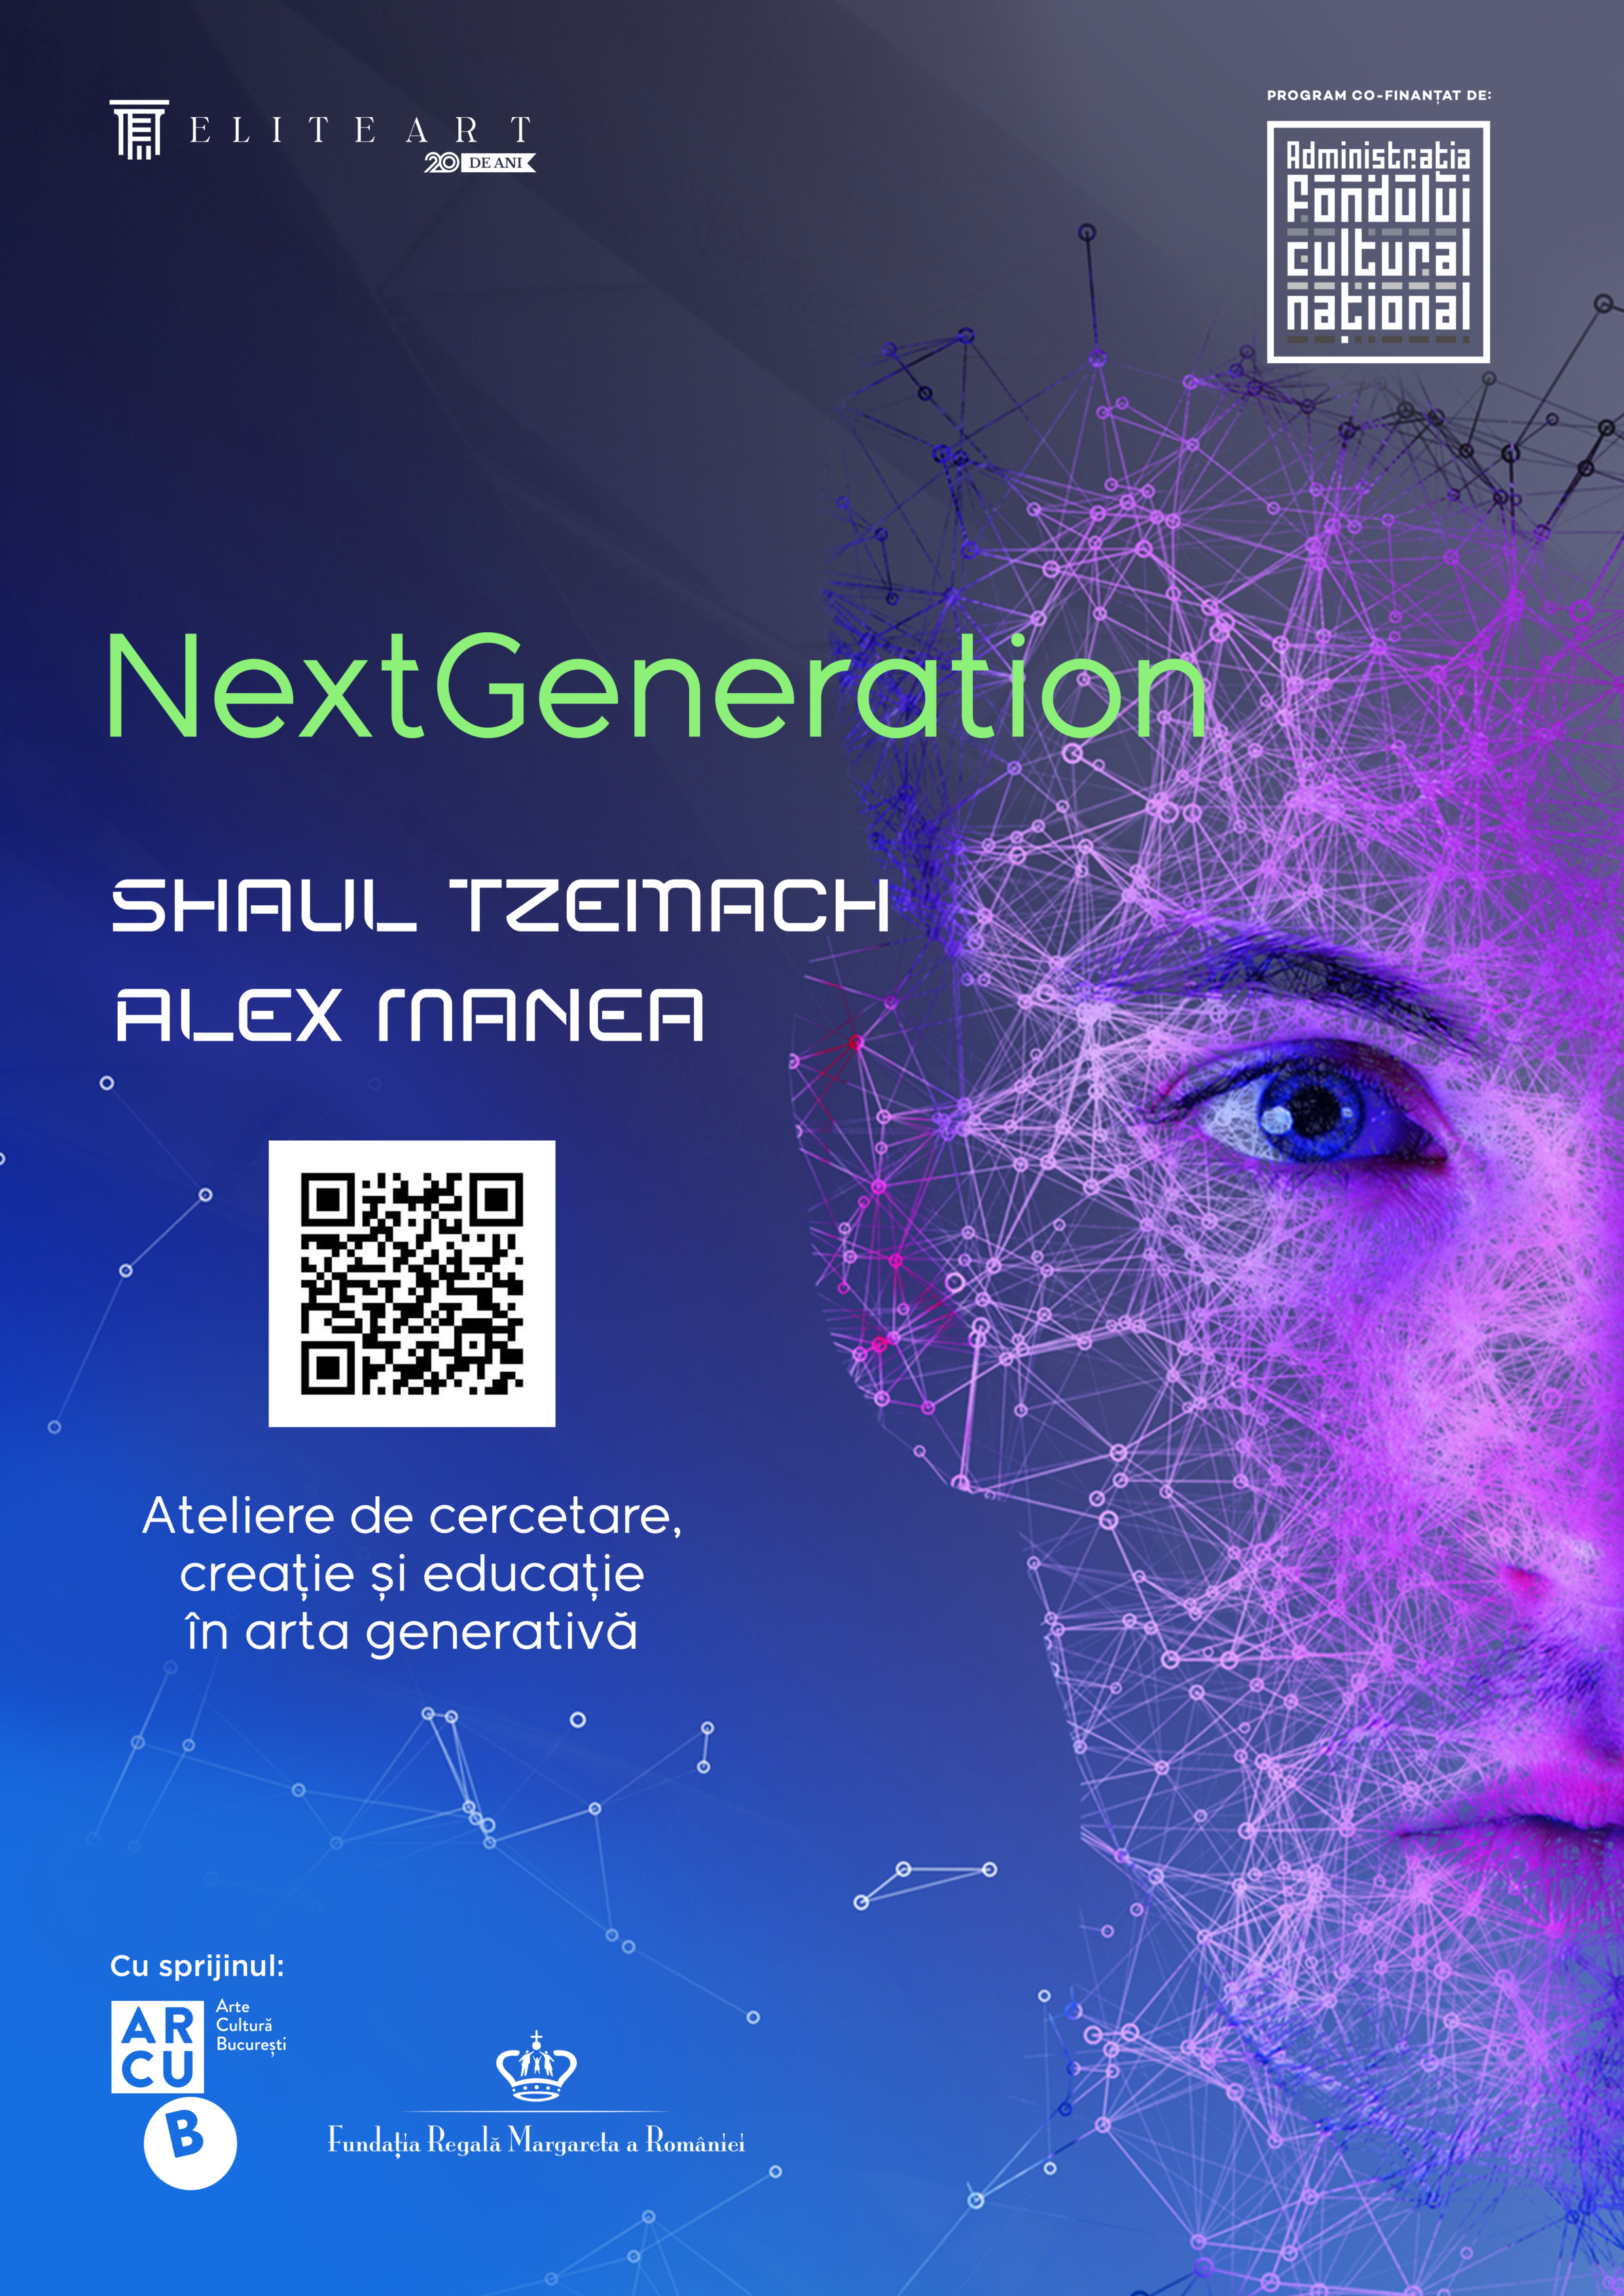 A2-Next Generation - resize